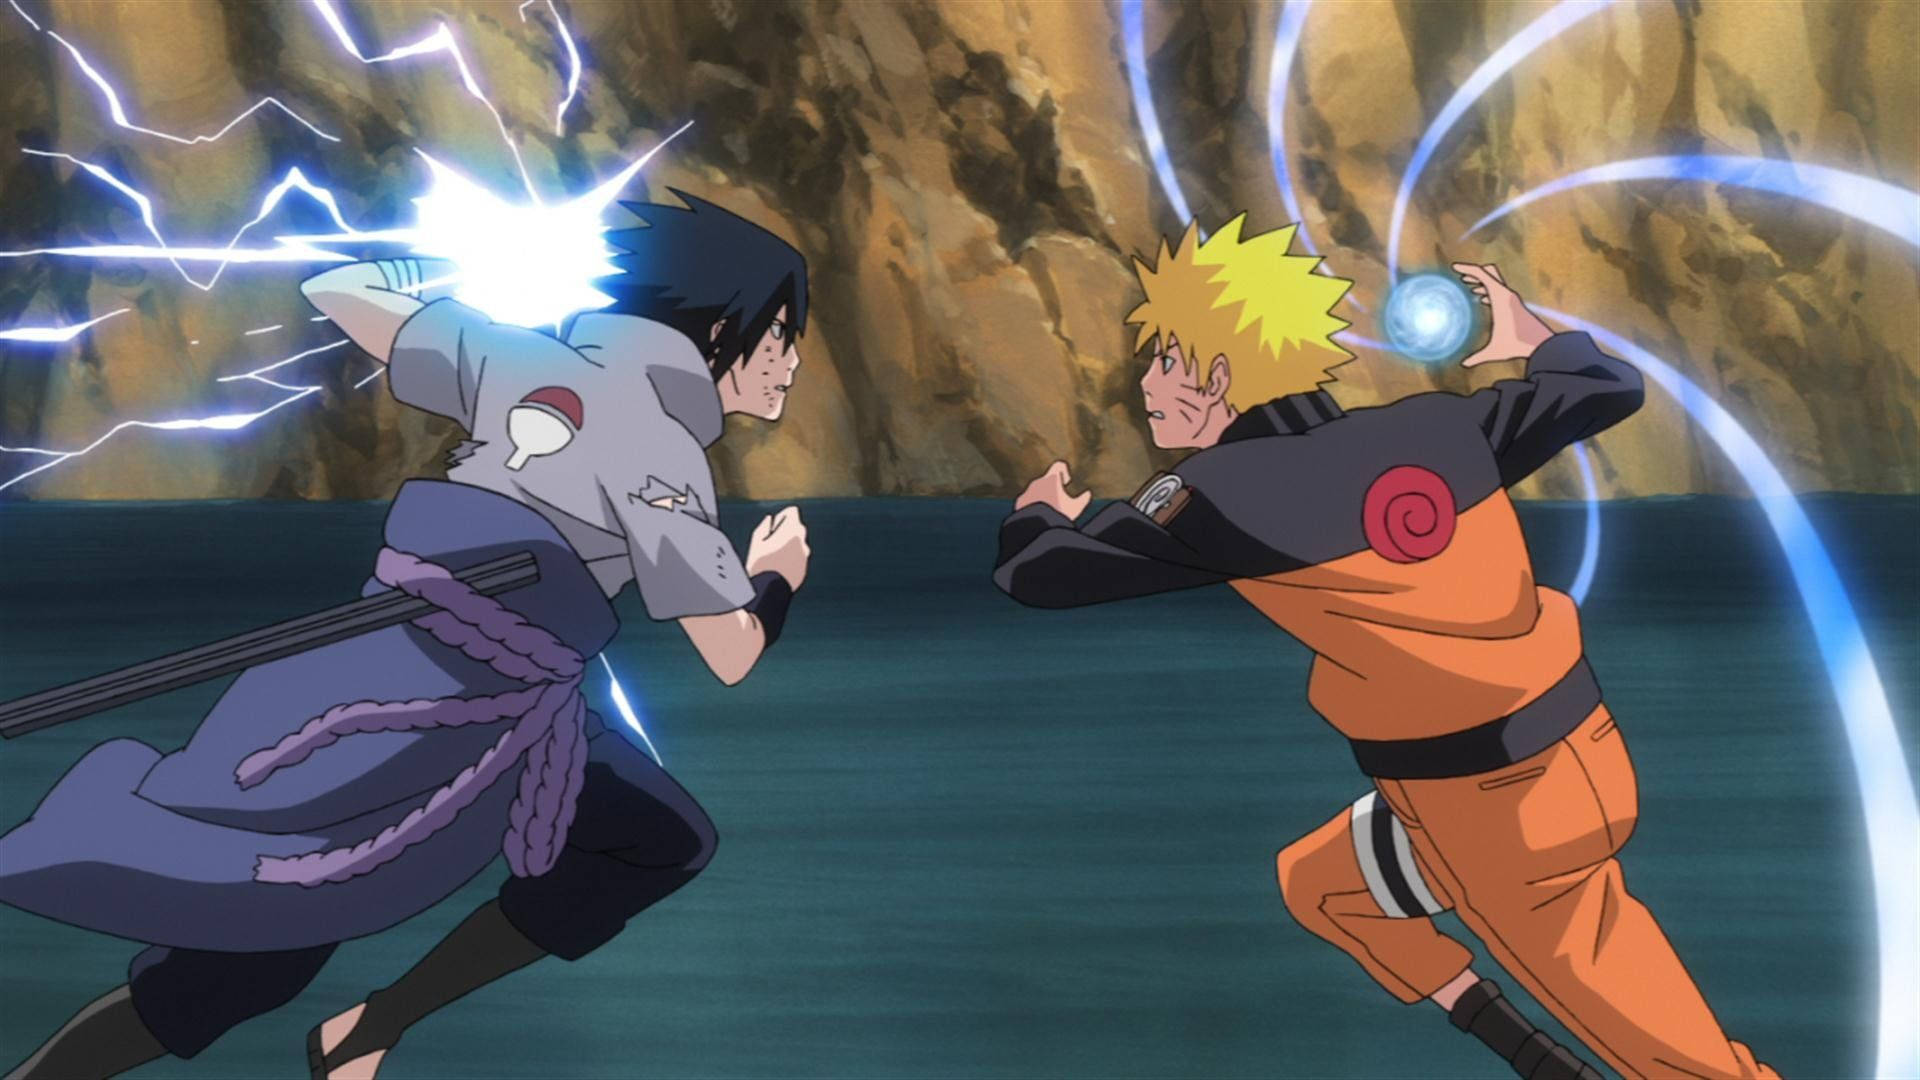 Chidori Naruto And Sasuke Duel